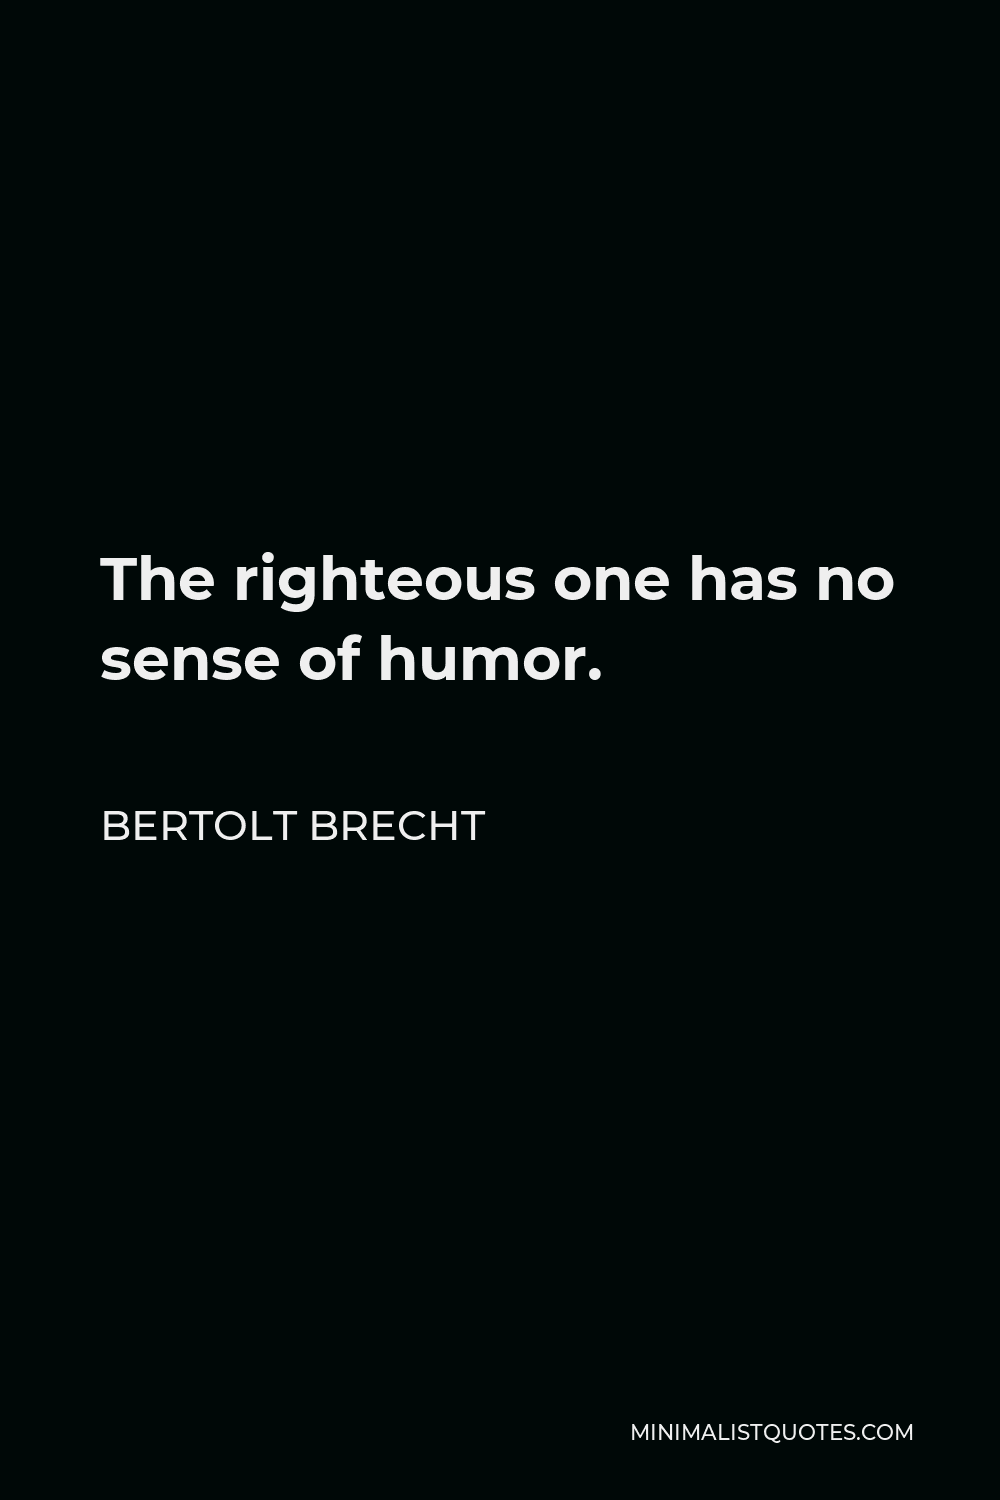 Bertolt Brecht Quote - The righteous one has no sense of humor.